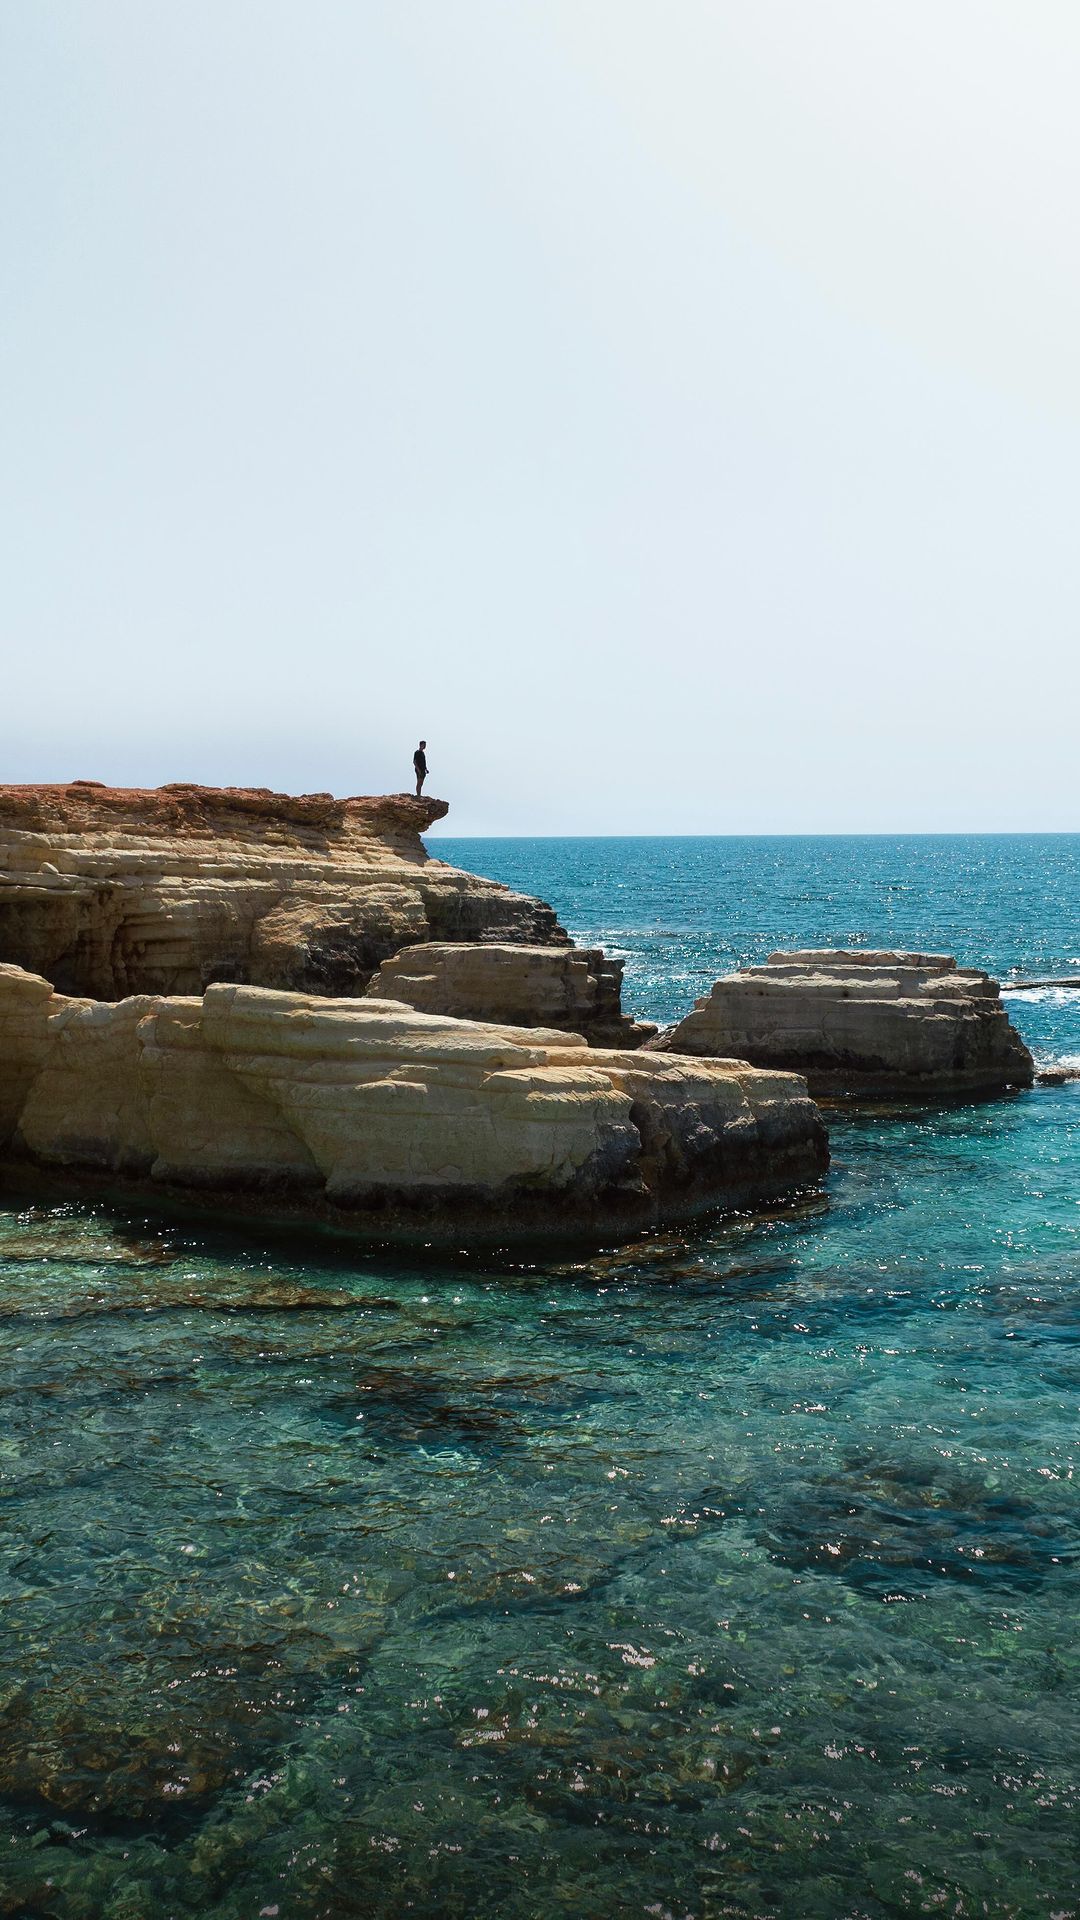 Explore Chypre in 5 Days